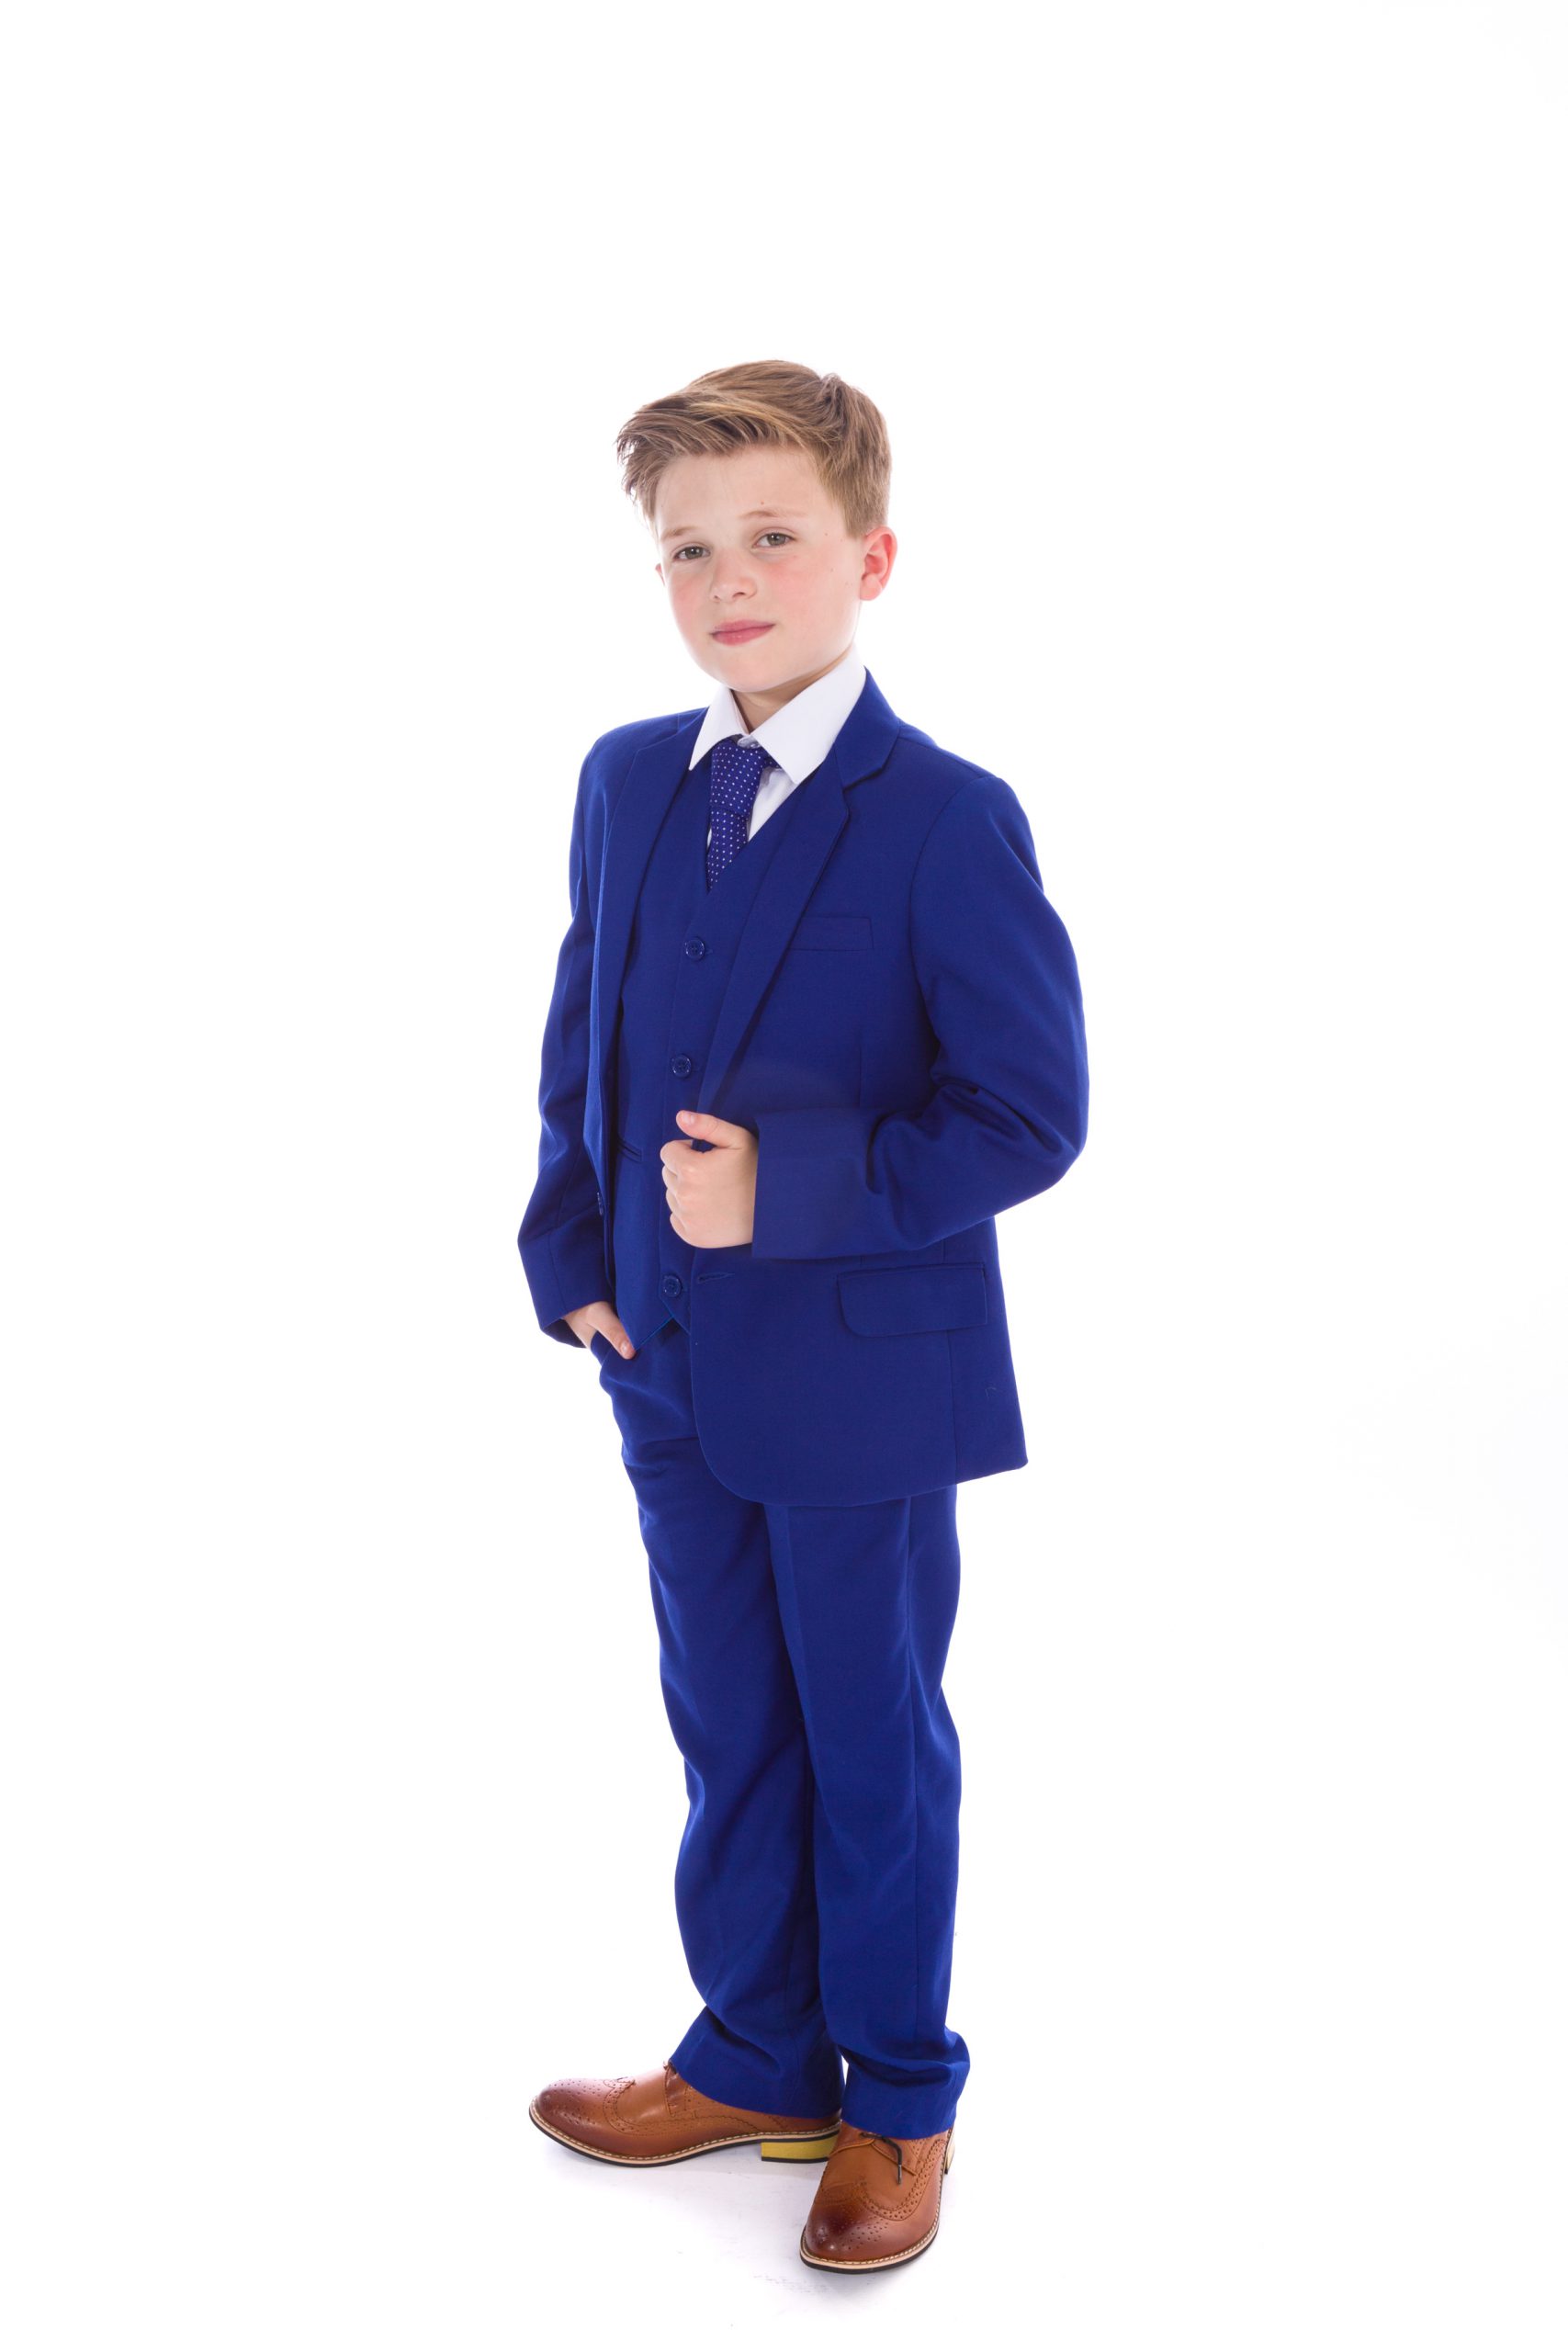 Vivaki Boys Blue Suits Electric Blue Suit Navy Formal Wedding Pageboy Party Prom 5pc Suit